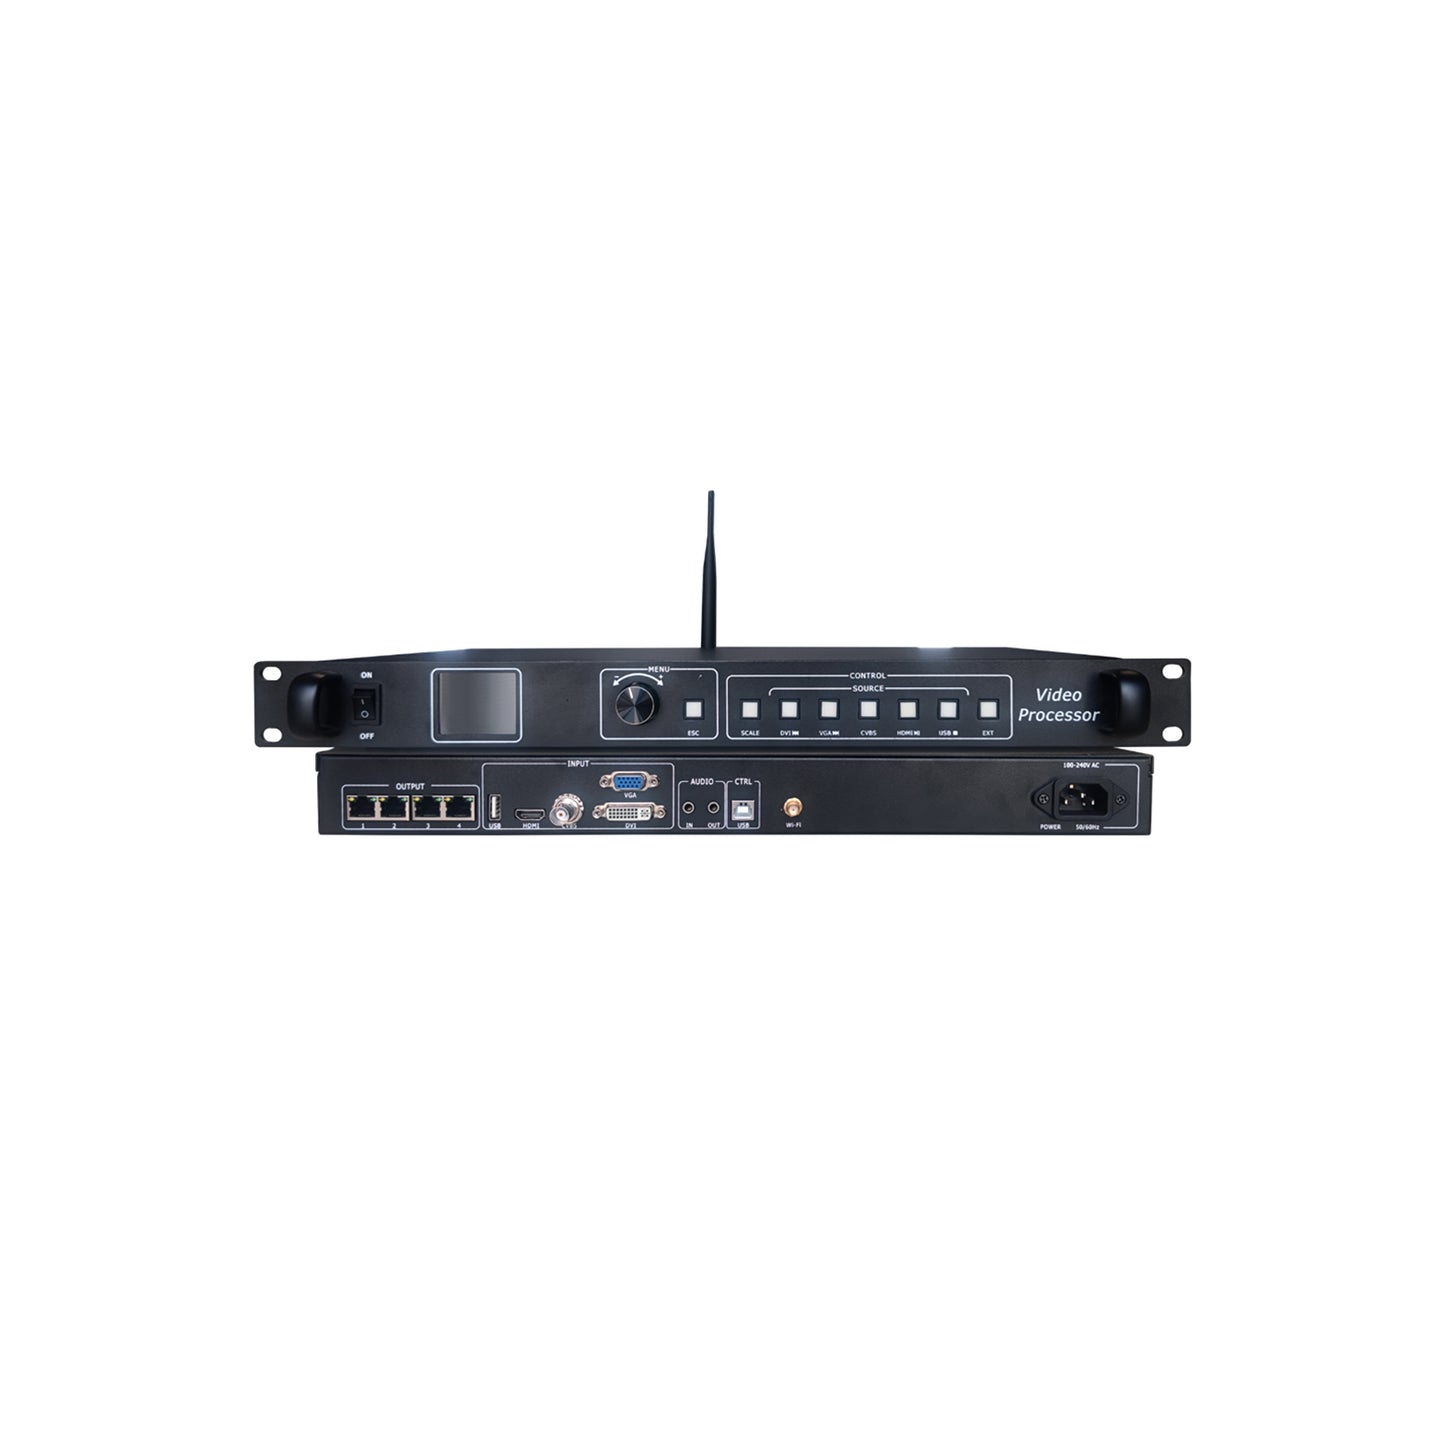 HD-VP410A Three-in-one LED Video Processor